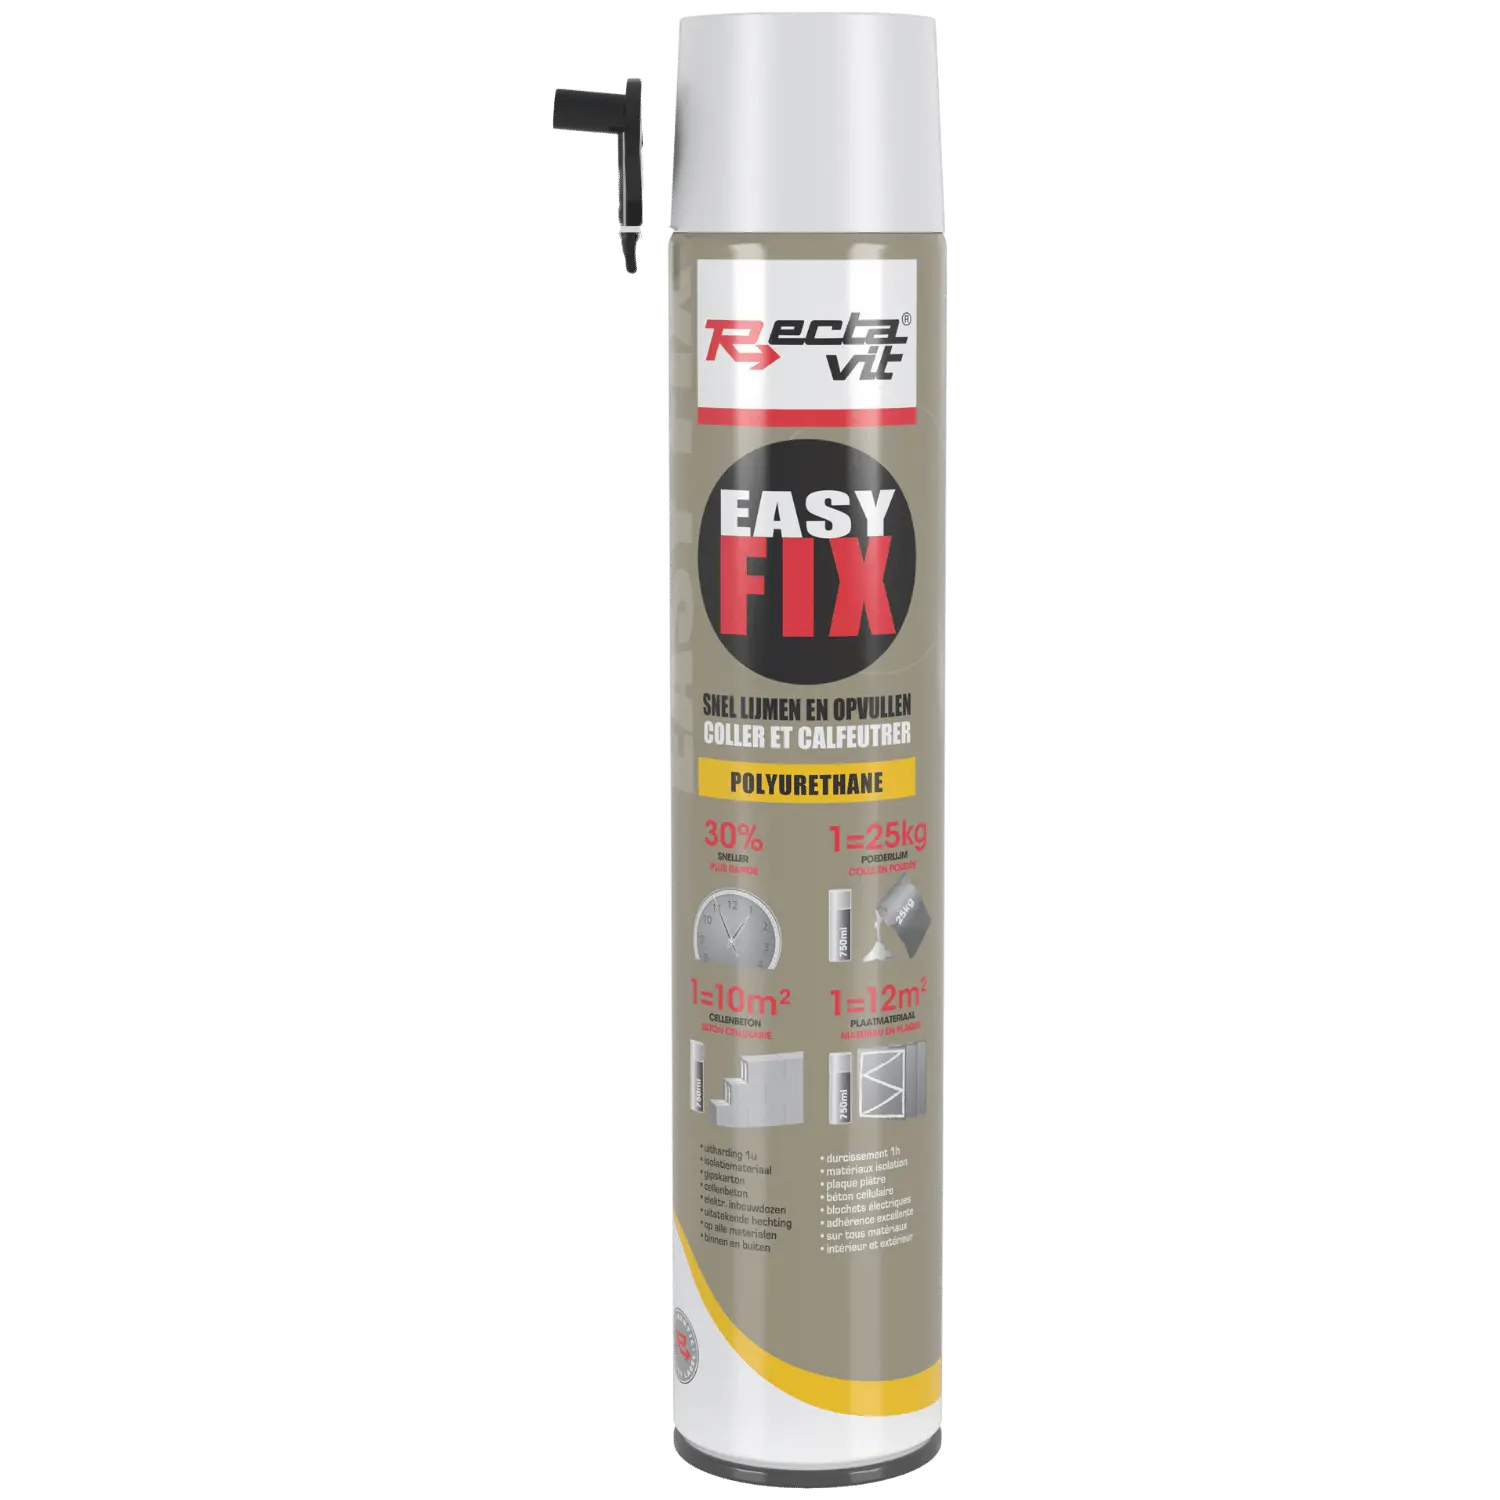 Colle PU Easy Fix à Faible Expansion - Nbs - Cartouche (750 ml)